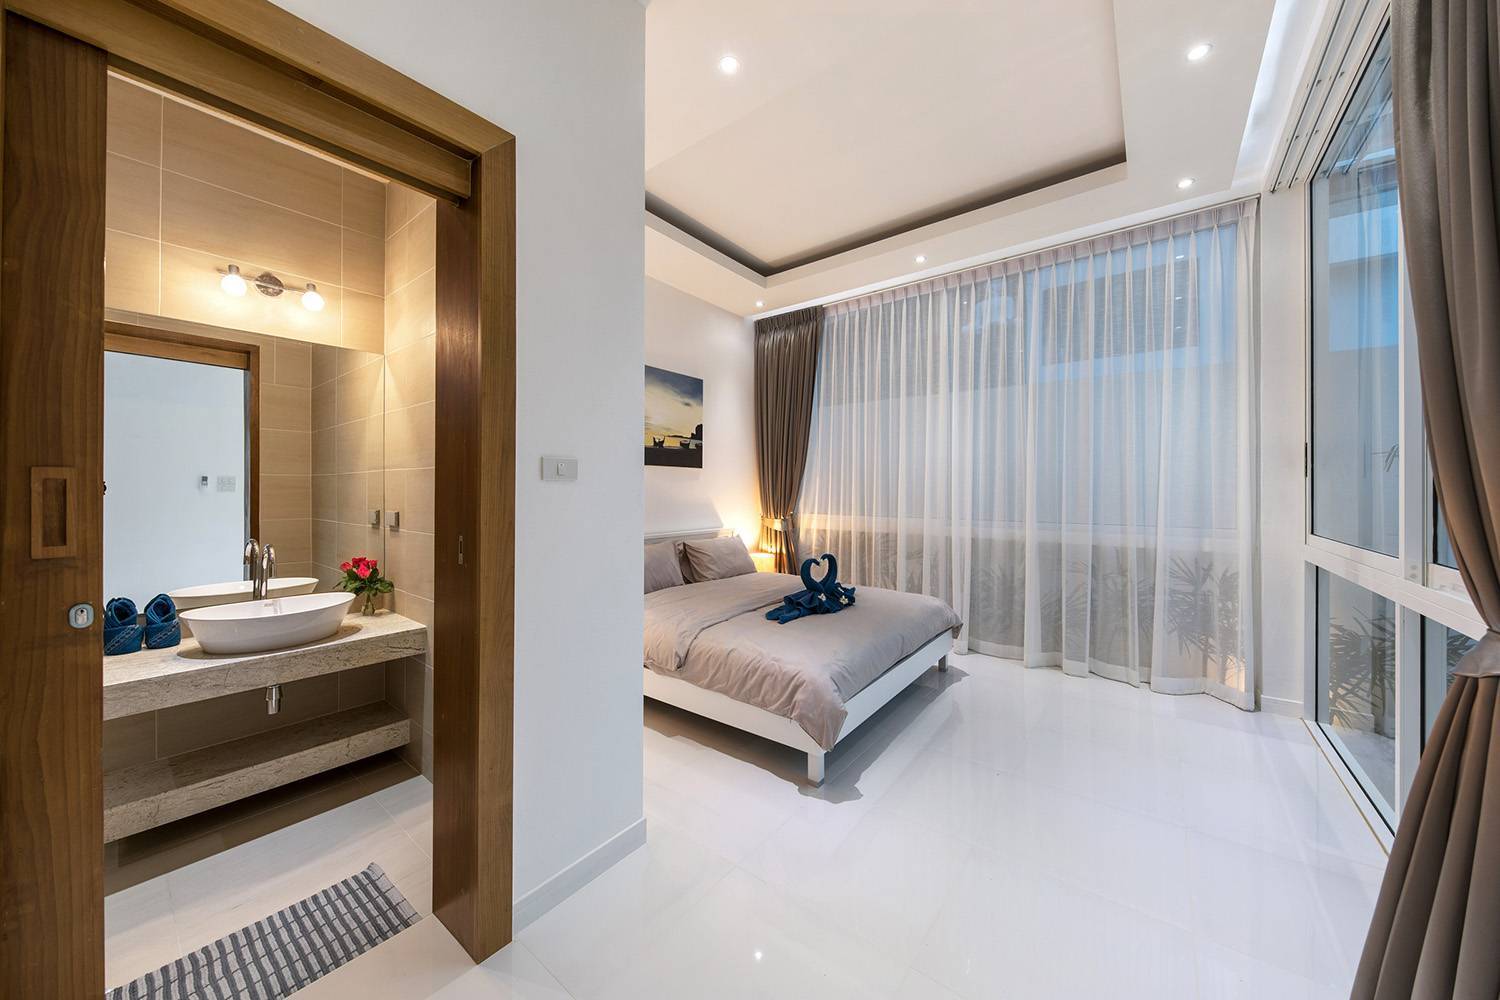 2 Bedrooms elegance pool villa in Chaweng: 2 Bedrooms elegance pool villa in Chaweng for sale @sunwaysamui